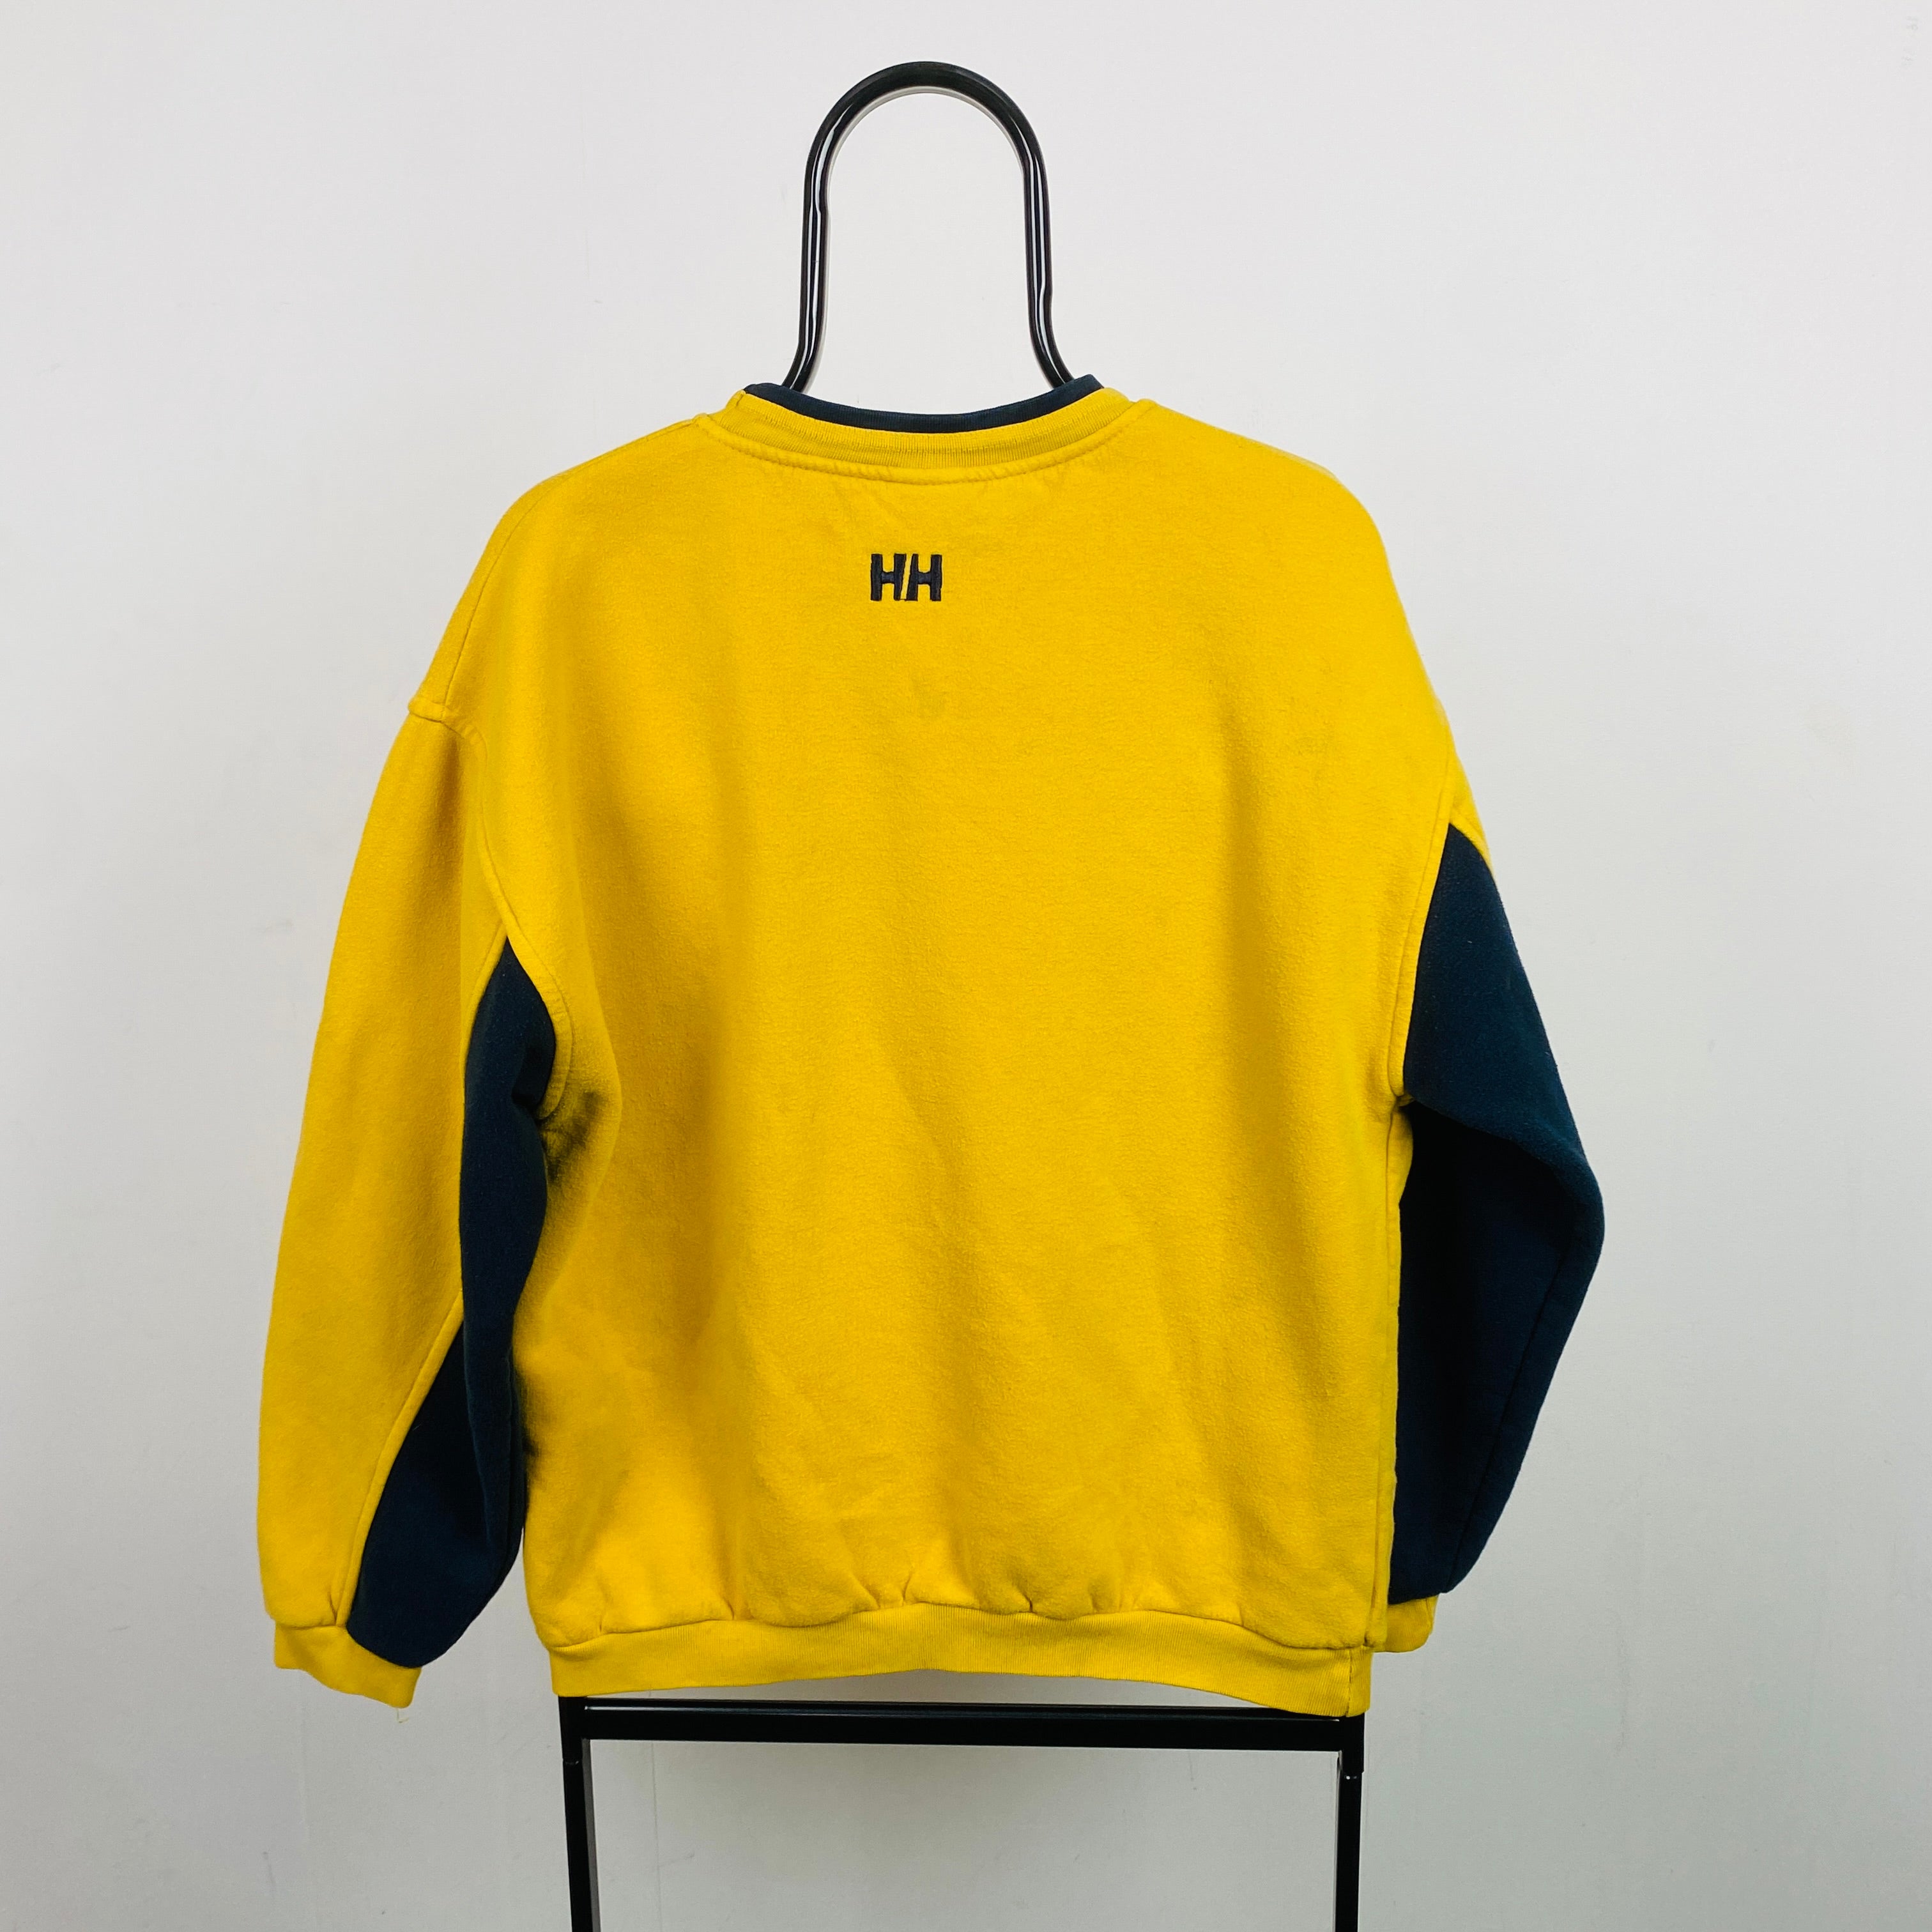 Retro Helly Hansen Sweatshirt Yellow XL